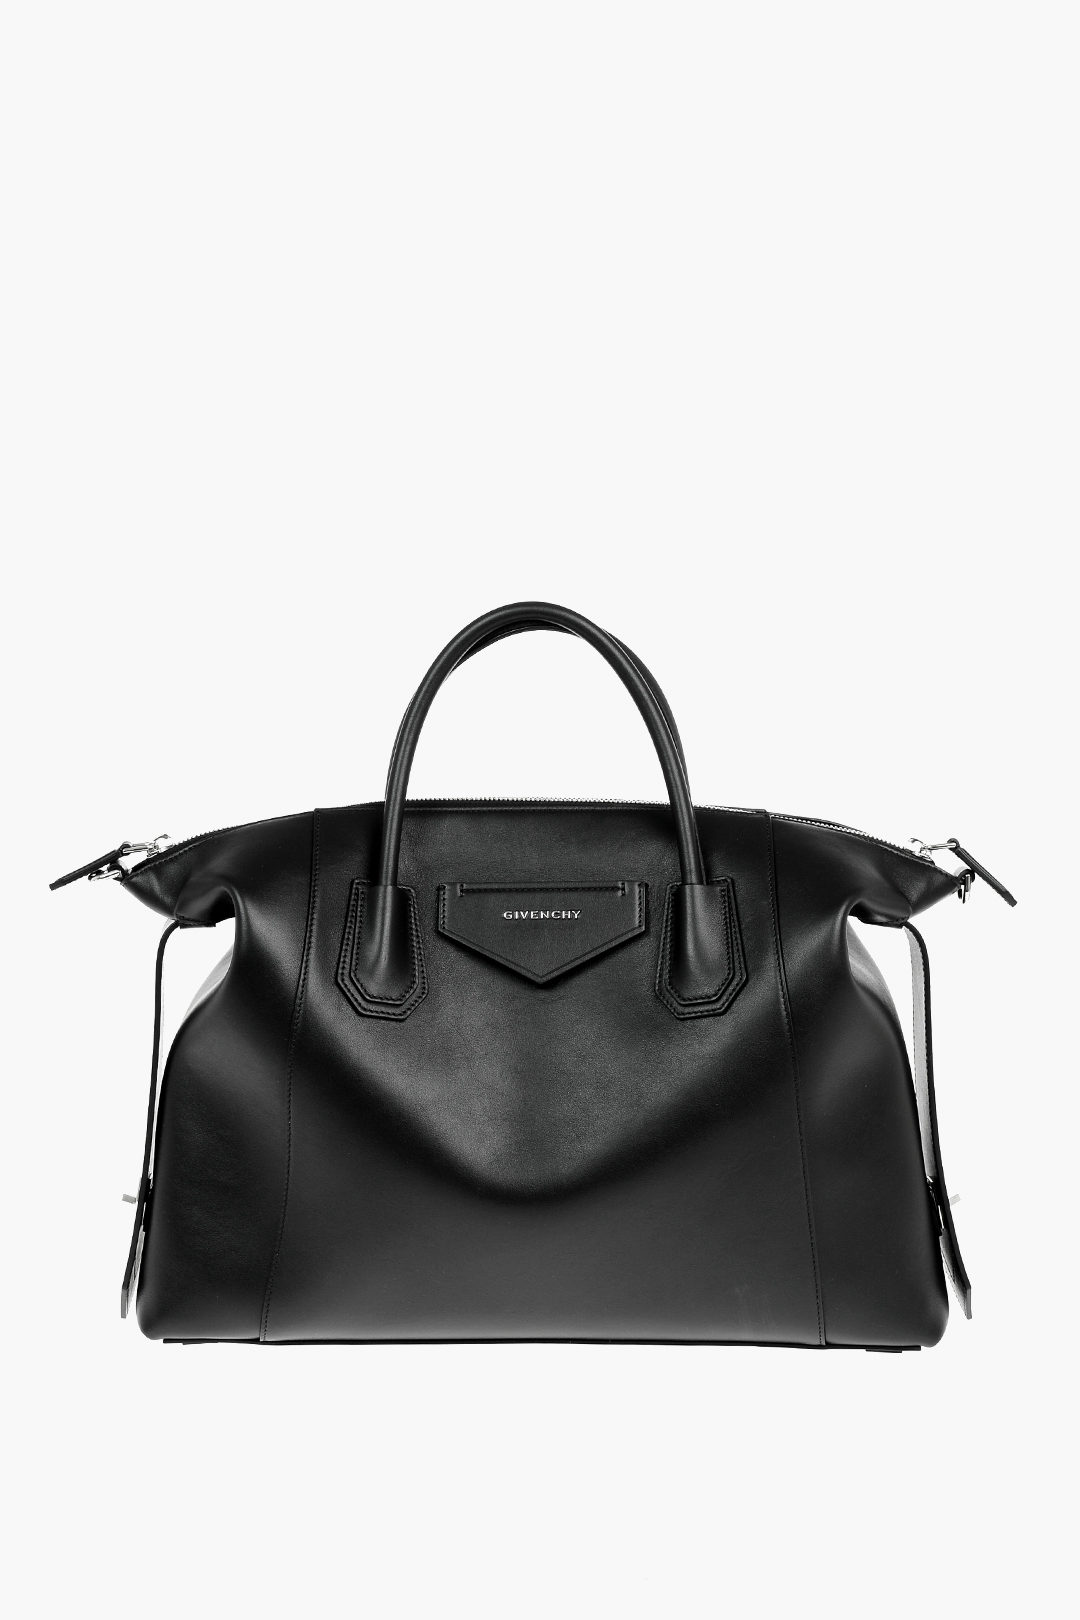 Givenchy Leather ANTIGONA Tote Bag women - Glamood Outlet